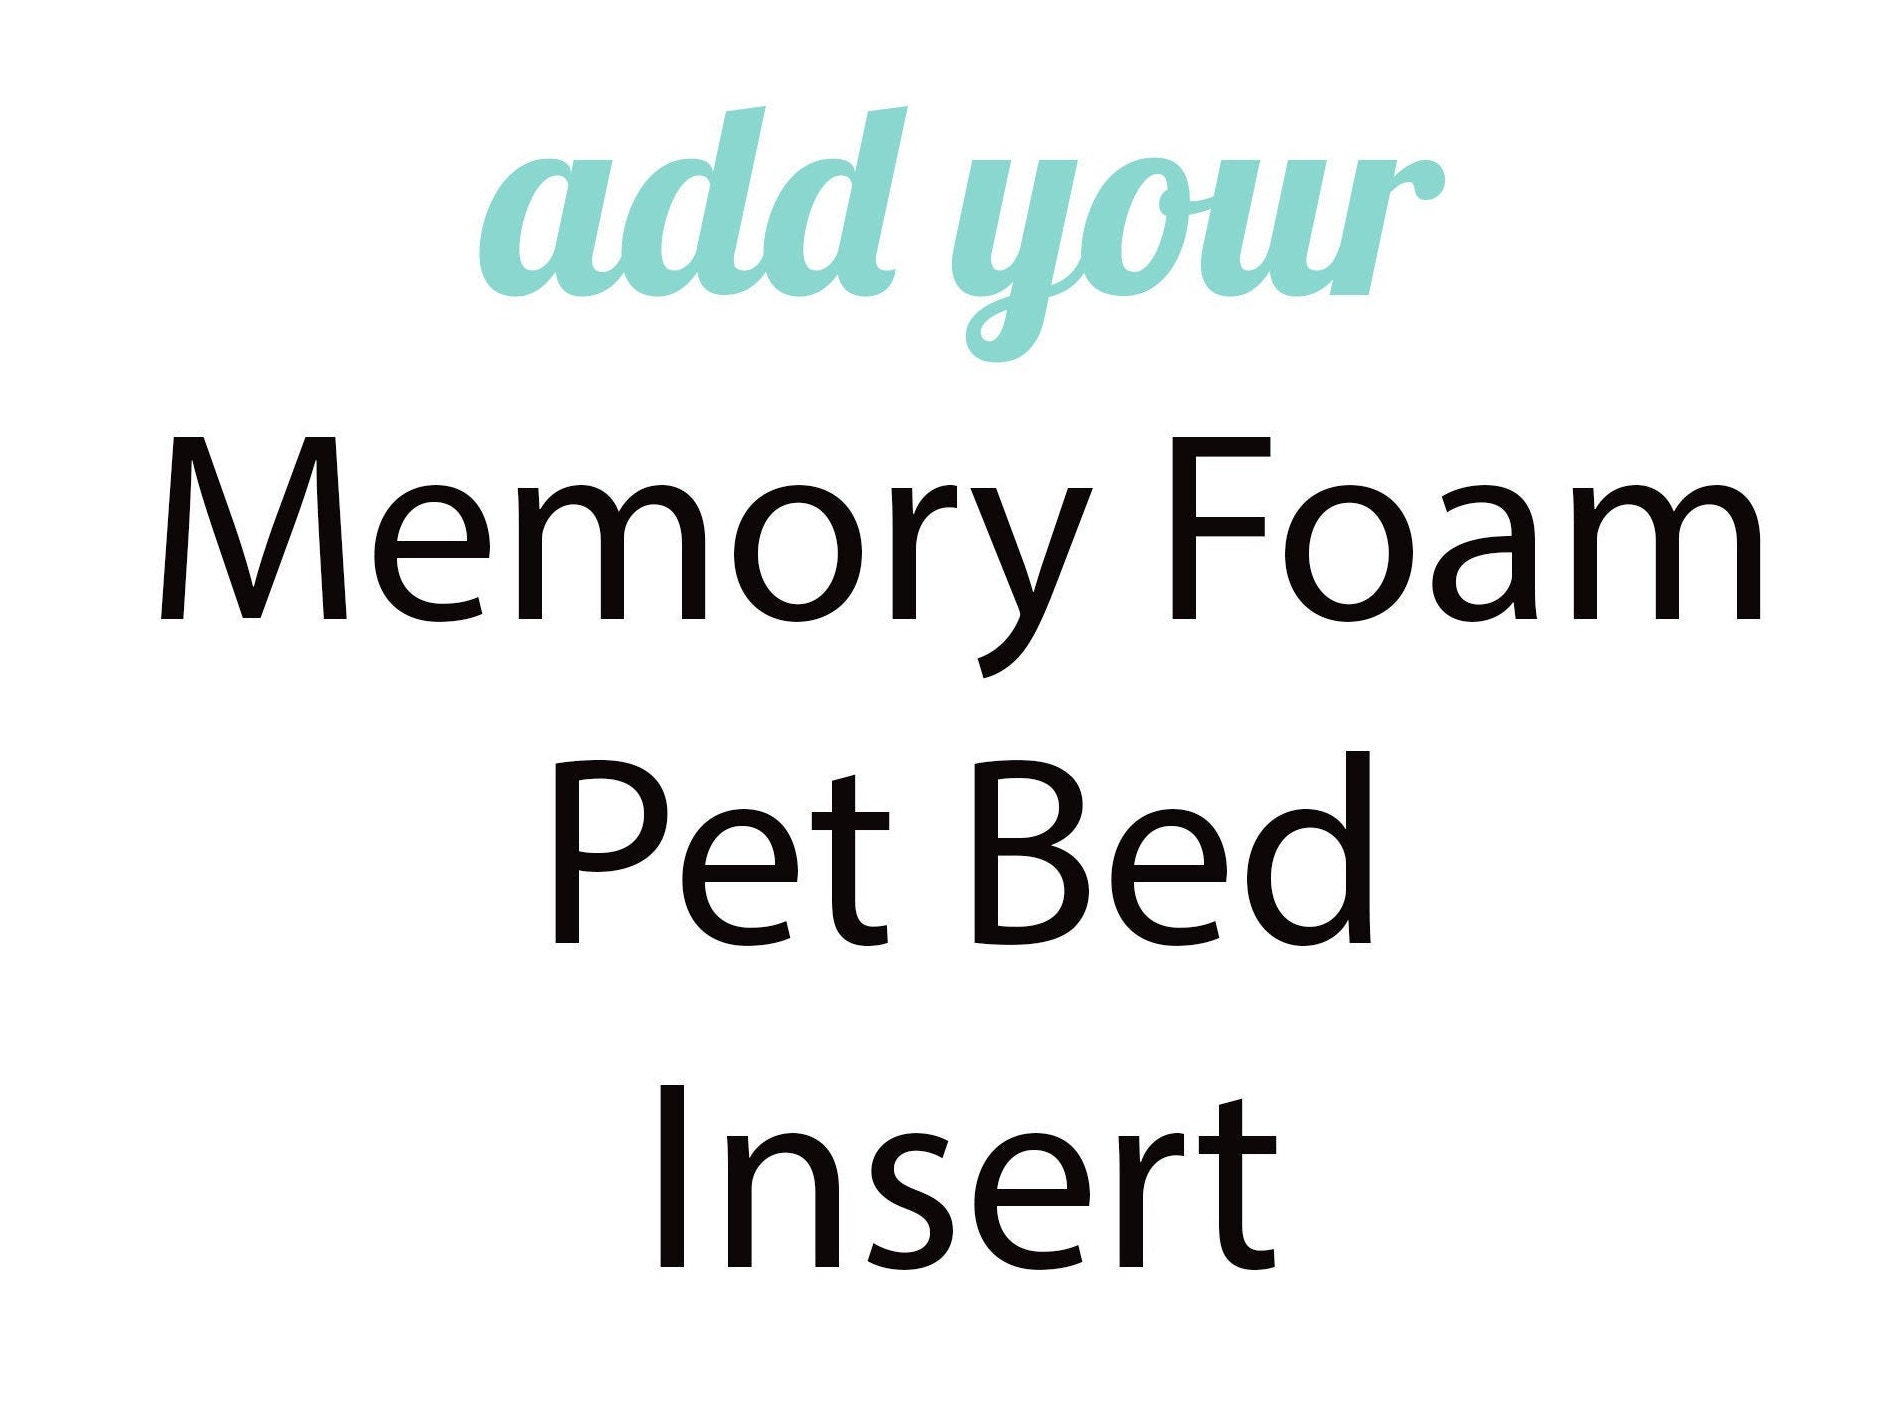 Memory Foam Dog Bed Insert